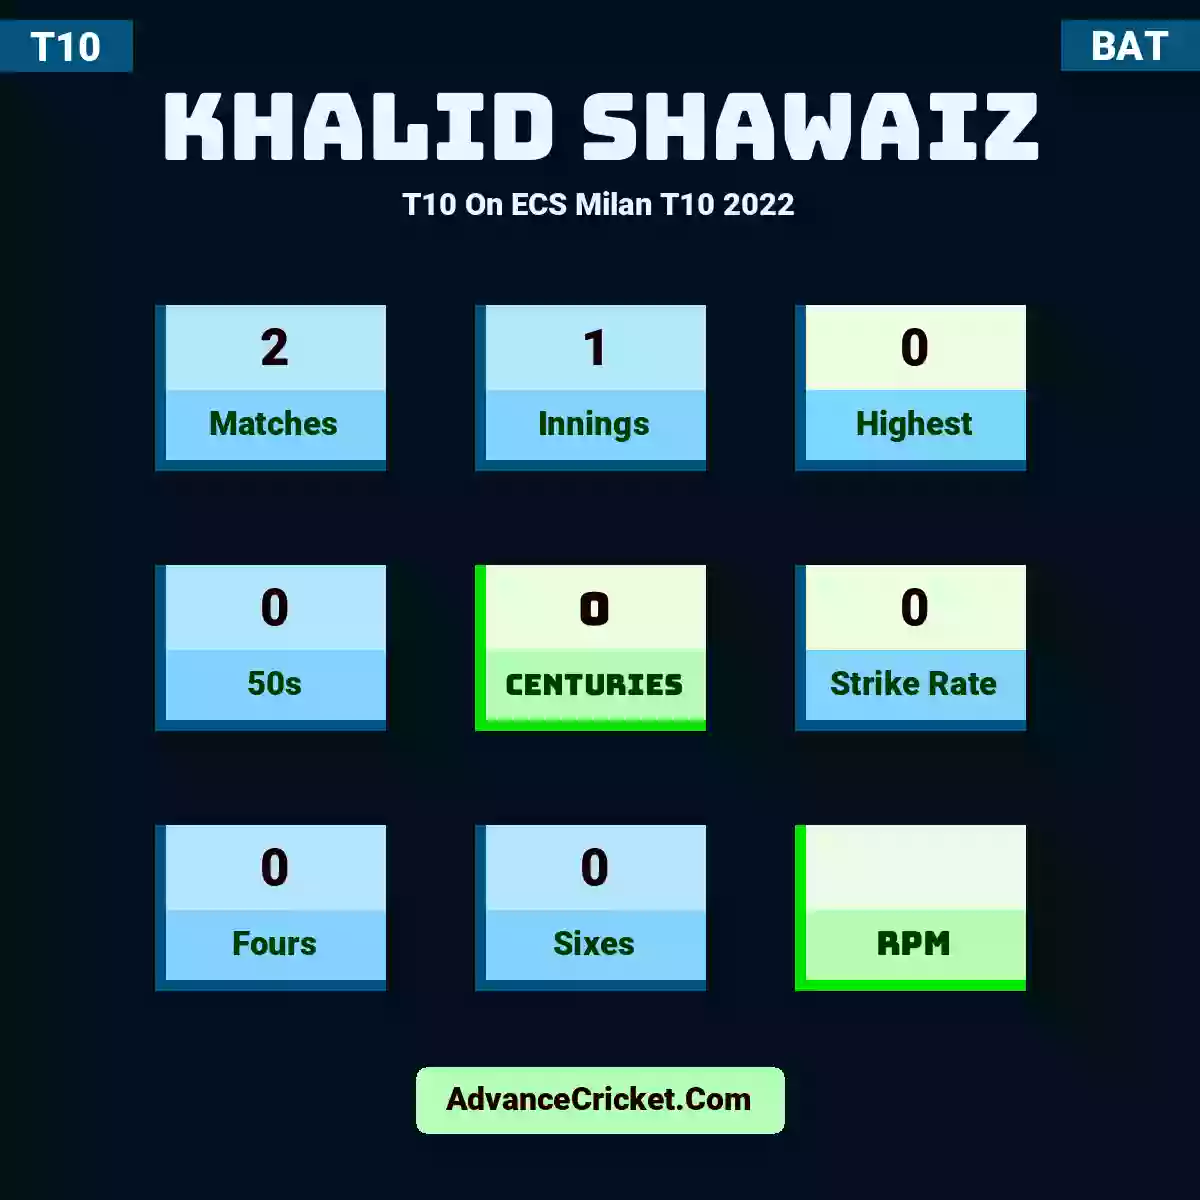 Khalid Shawaiz T10  On ECS Milan T10 2022, Khalid Shawaiz played 2 matches, scored 0 runs as highest, 0 half-centuries, and 0 centuries, with a strike rate of 0. K.Shawaiz hit 0 fours and 0 sixes.